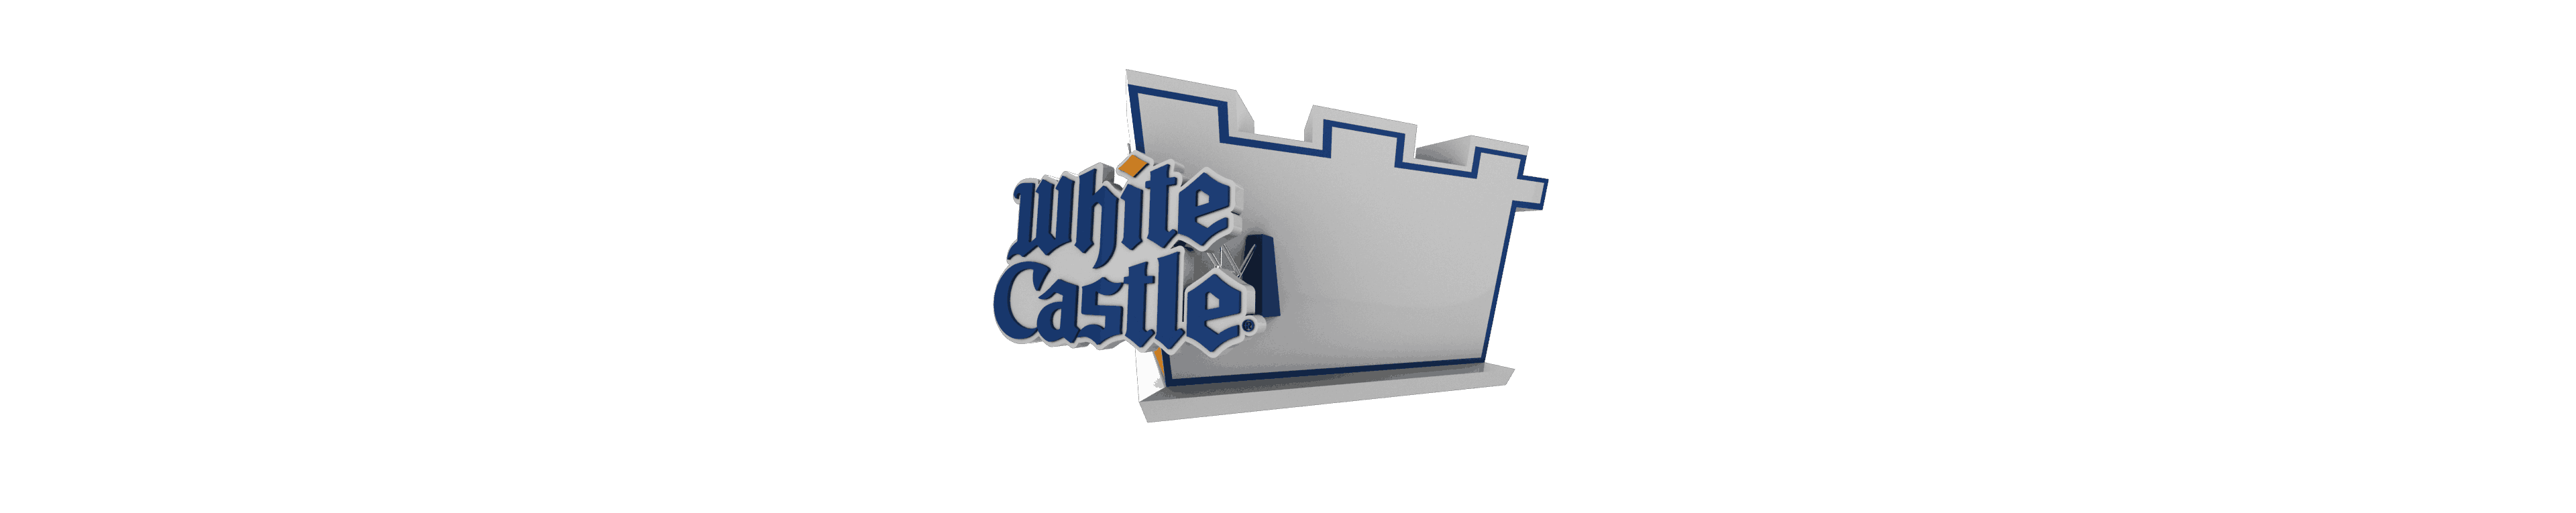 White Castle Logo - White Castle